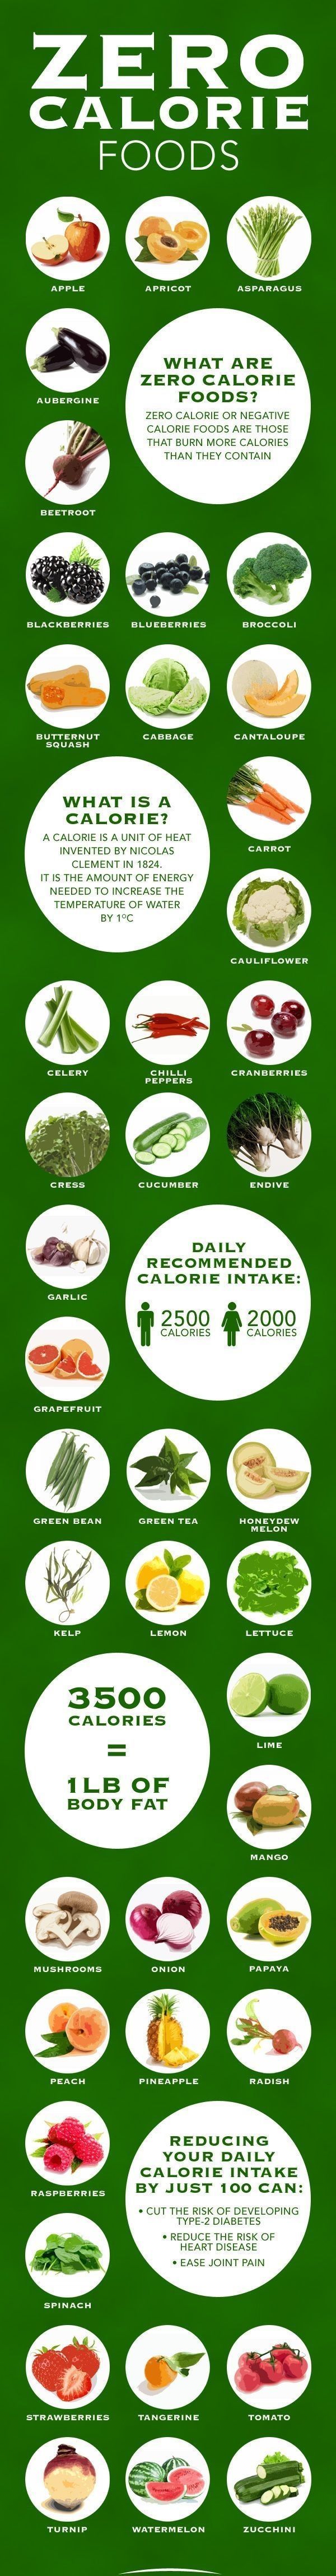 Zero-Calorie Foods